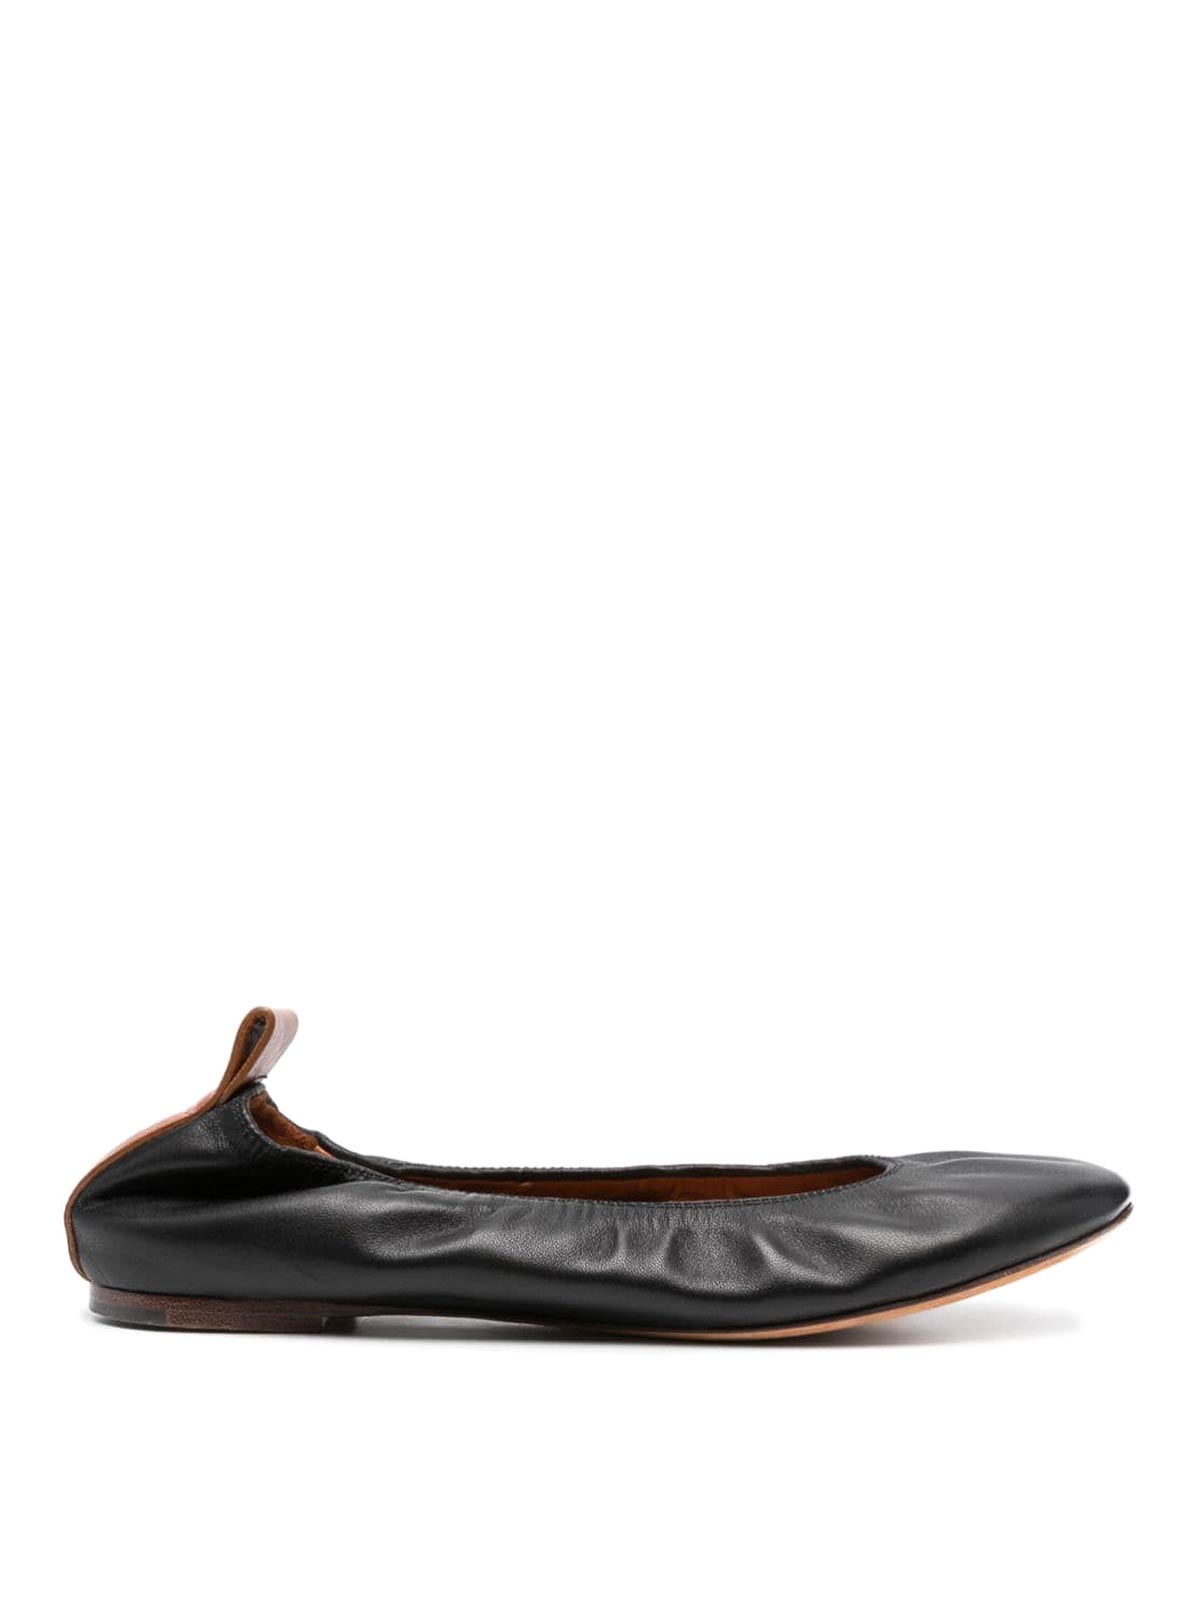 Lanvin Leather Ballet Flats In Black